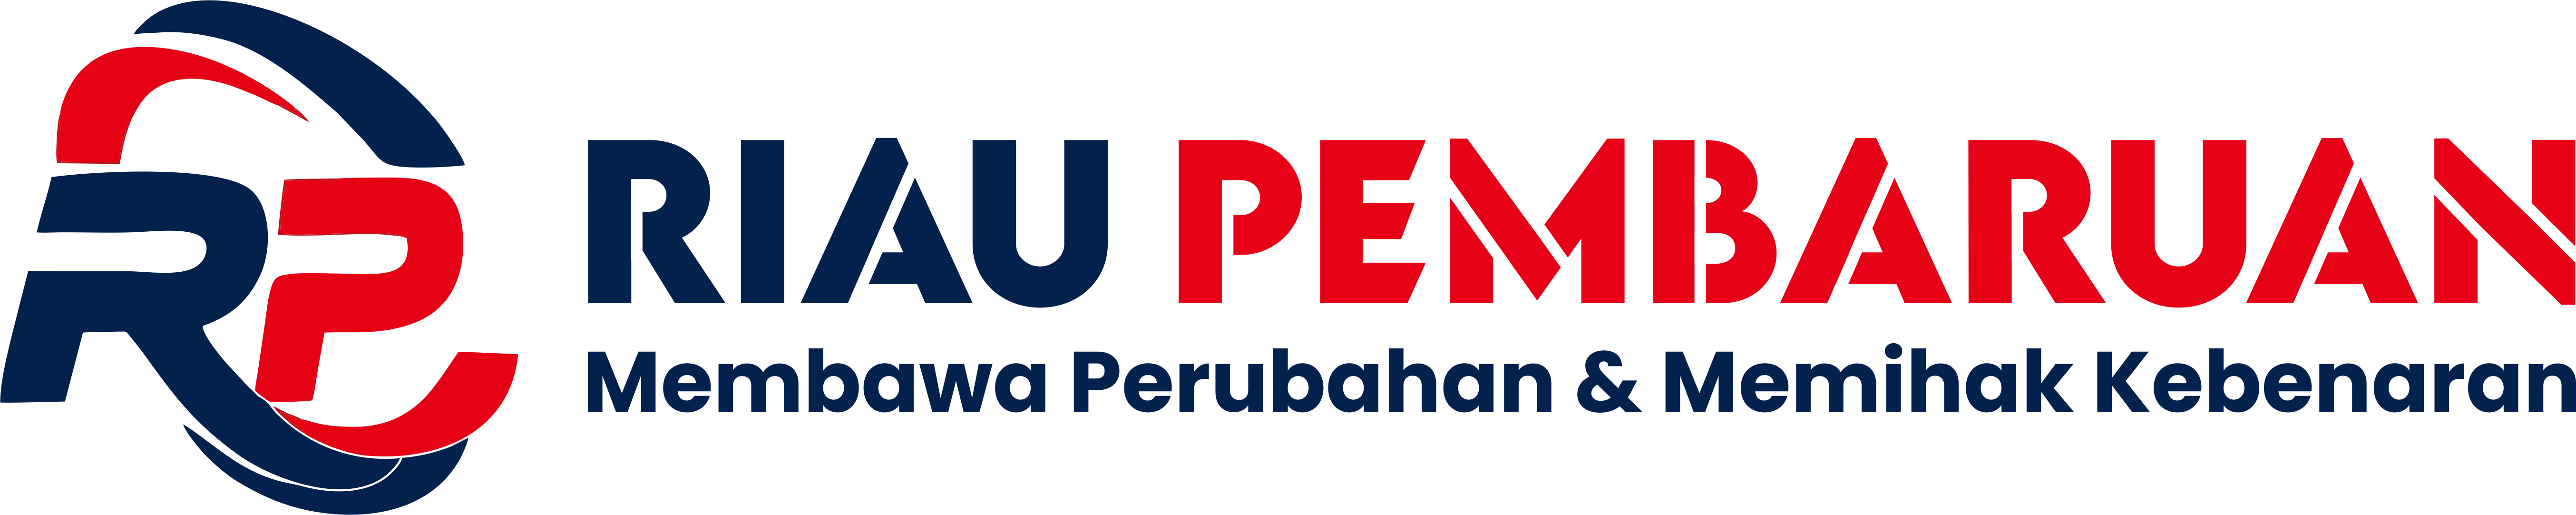 Riau Pembaruan - Portal Berita Riau Terkini